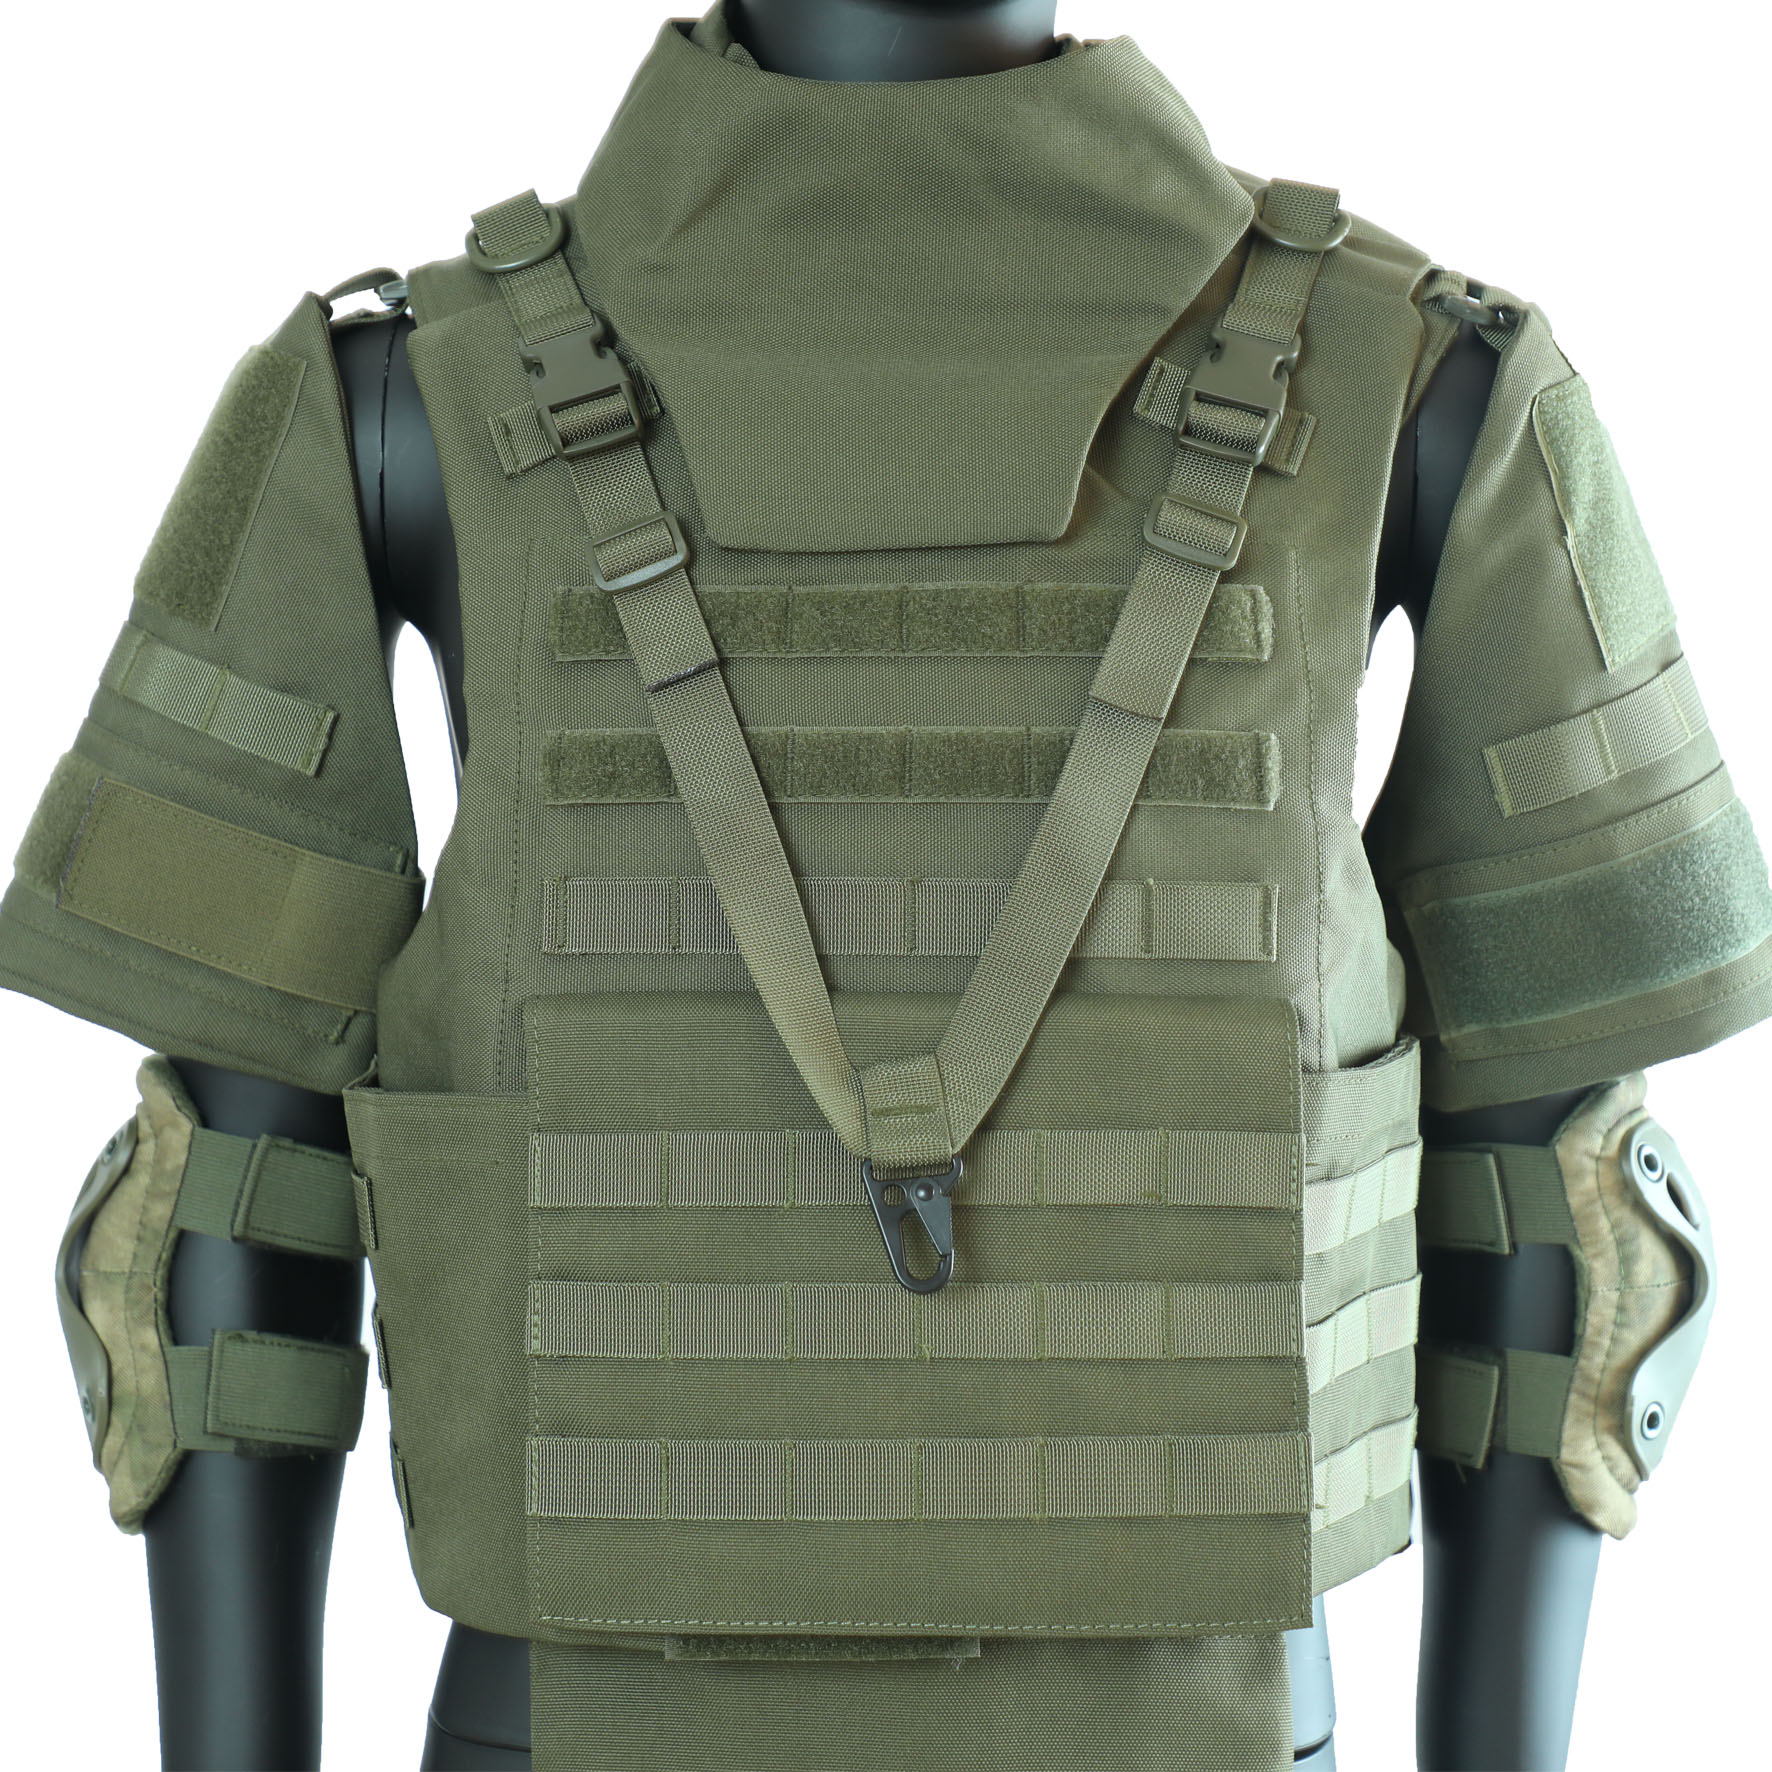 Full Protection Bulletproof Jacket